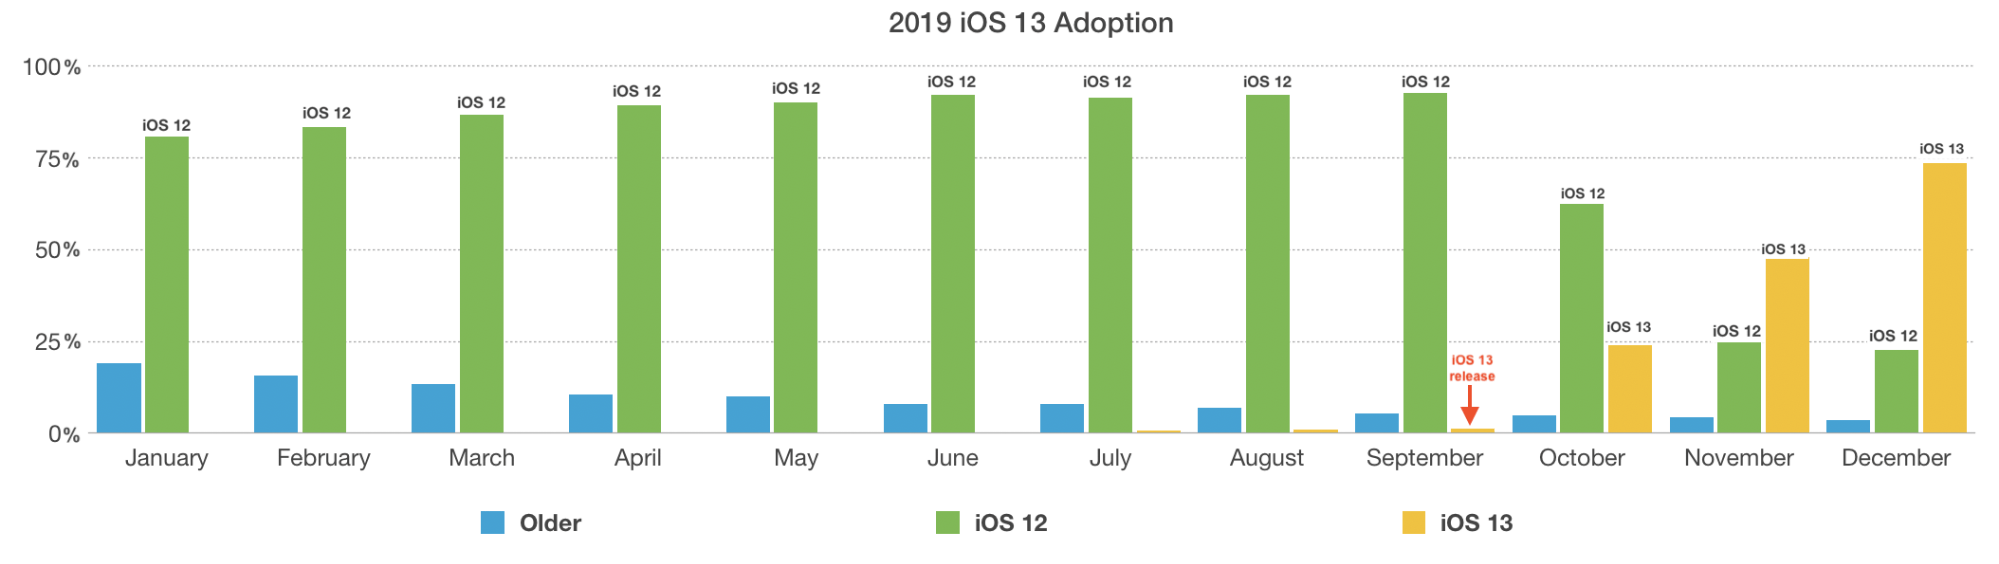 iOS 13 Adoption Rate